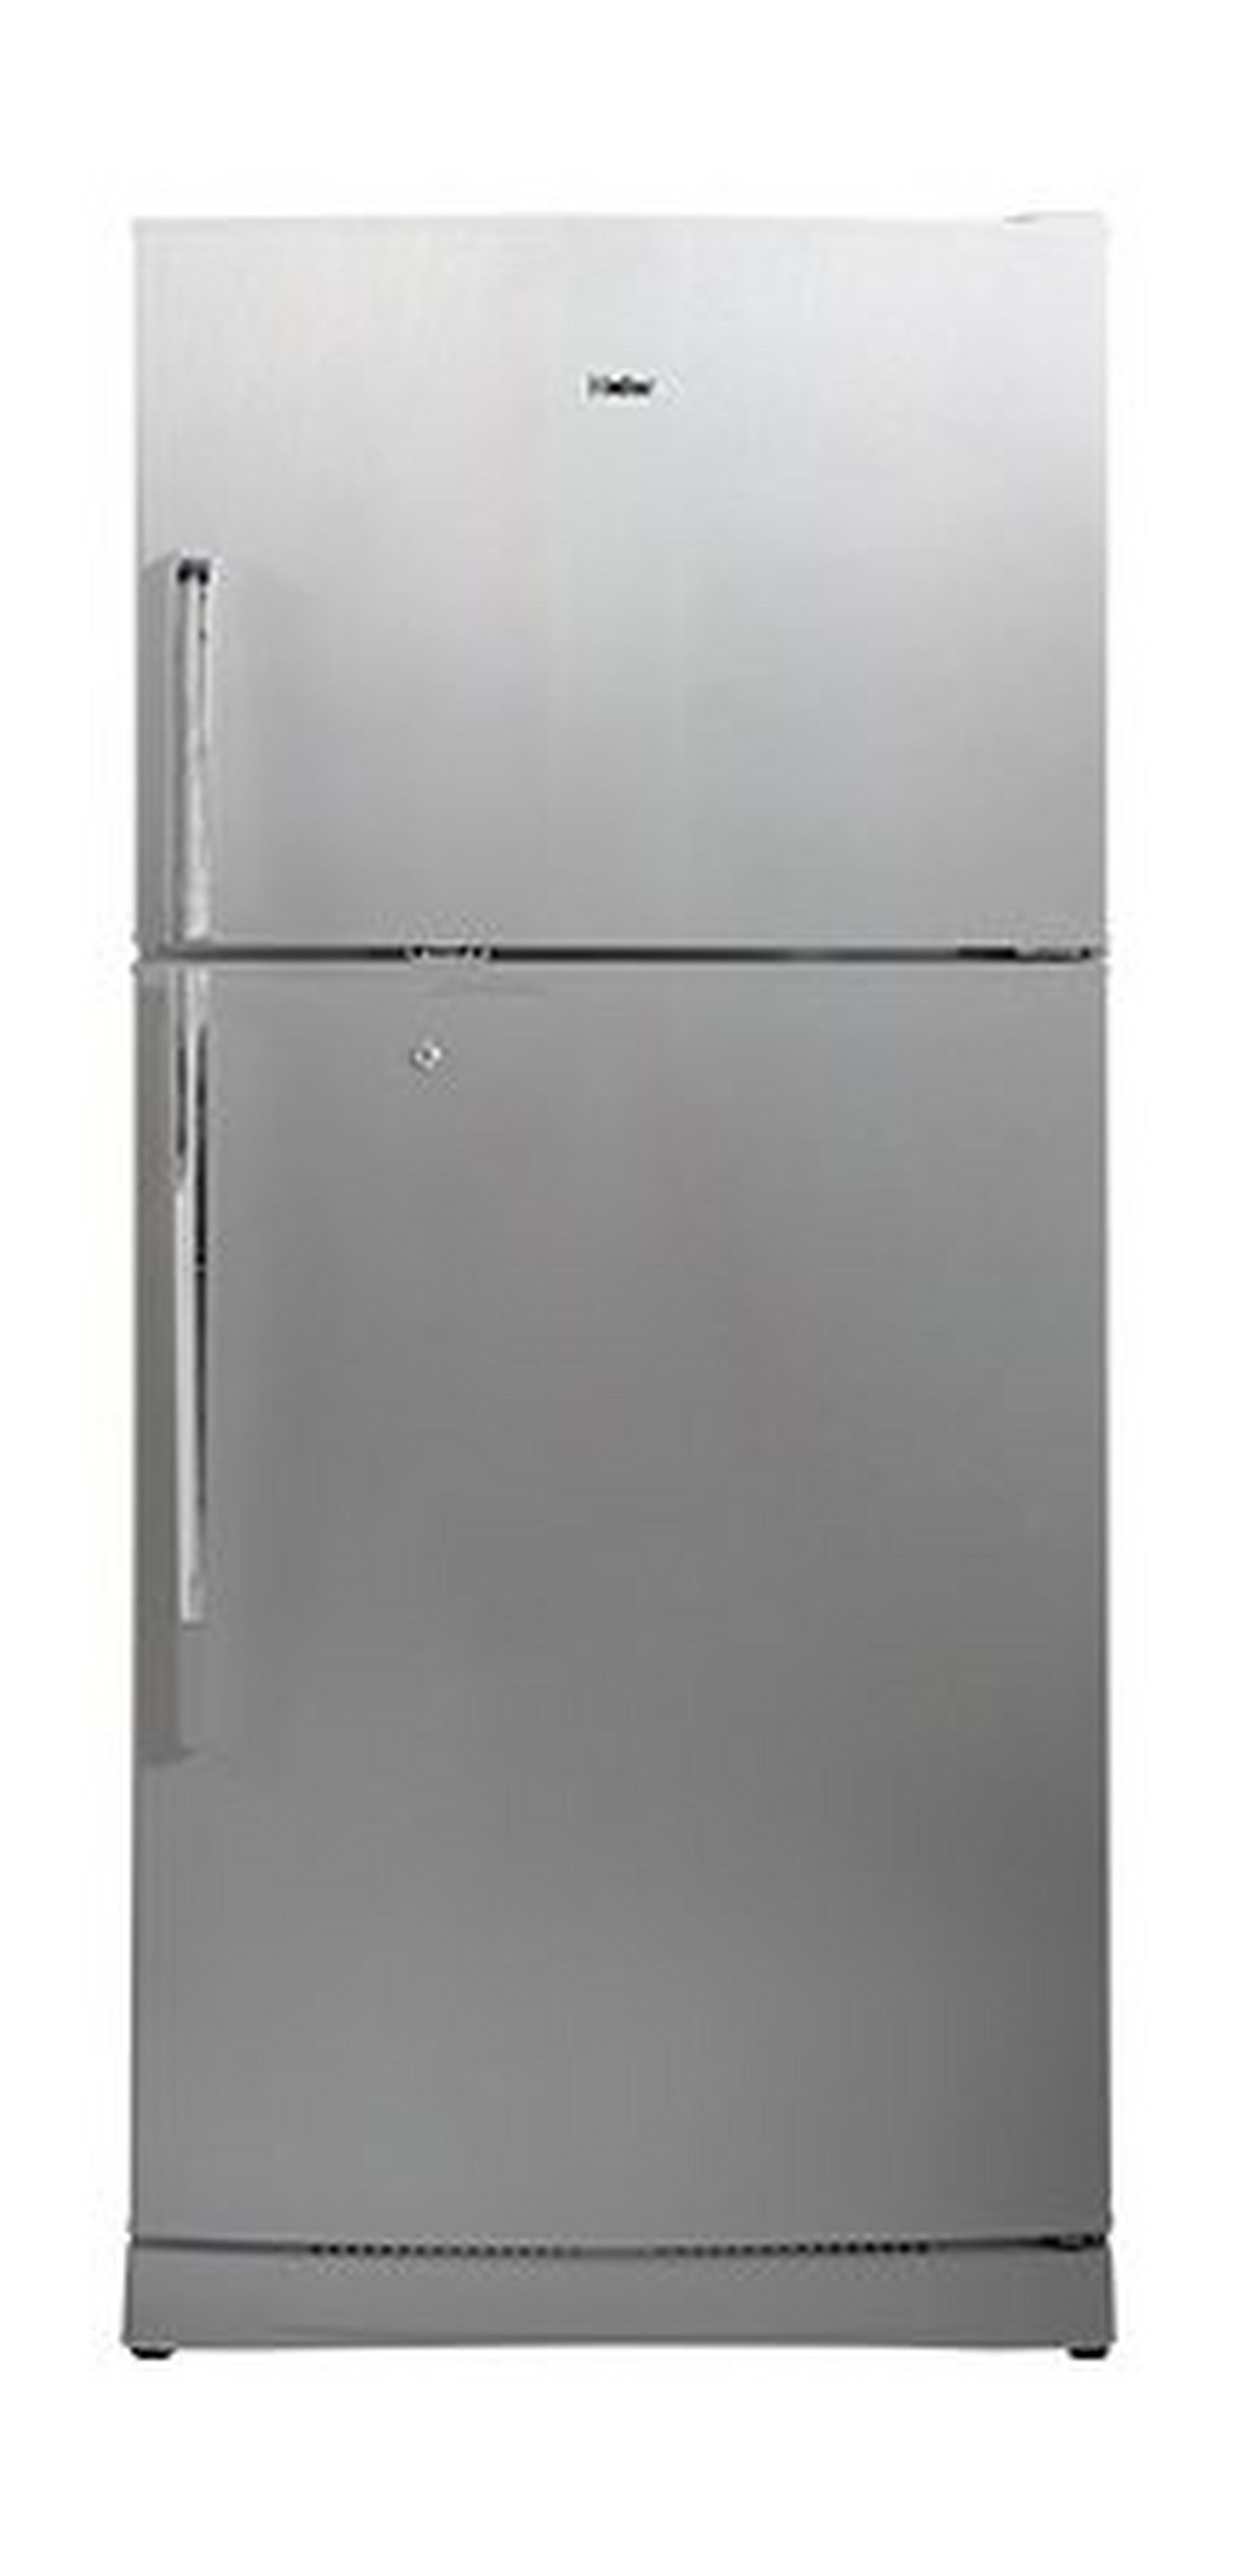 Haier 15.5 CFT Top Mount Refrigerator (HRF-858FKISS) - Silver